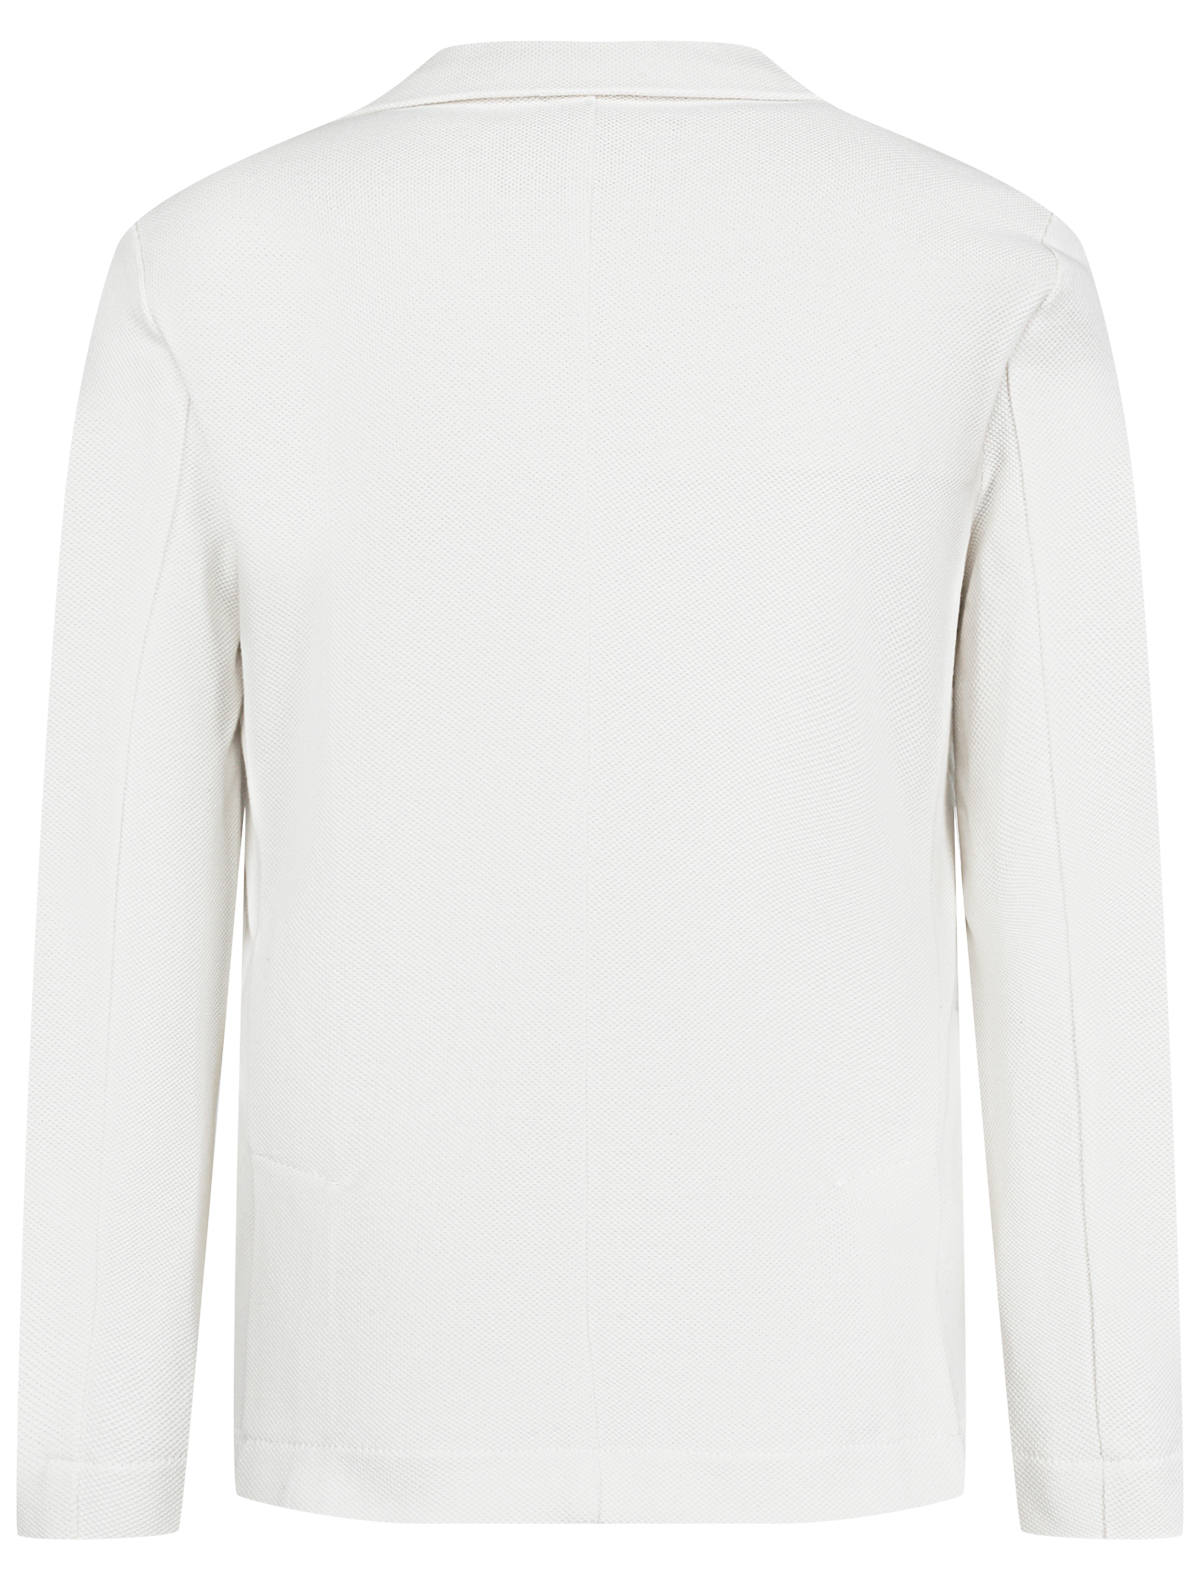 Пиджак Il Gufo 2520166, цвет белый, размер 3 1334519370064 - фото 2